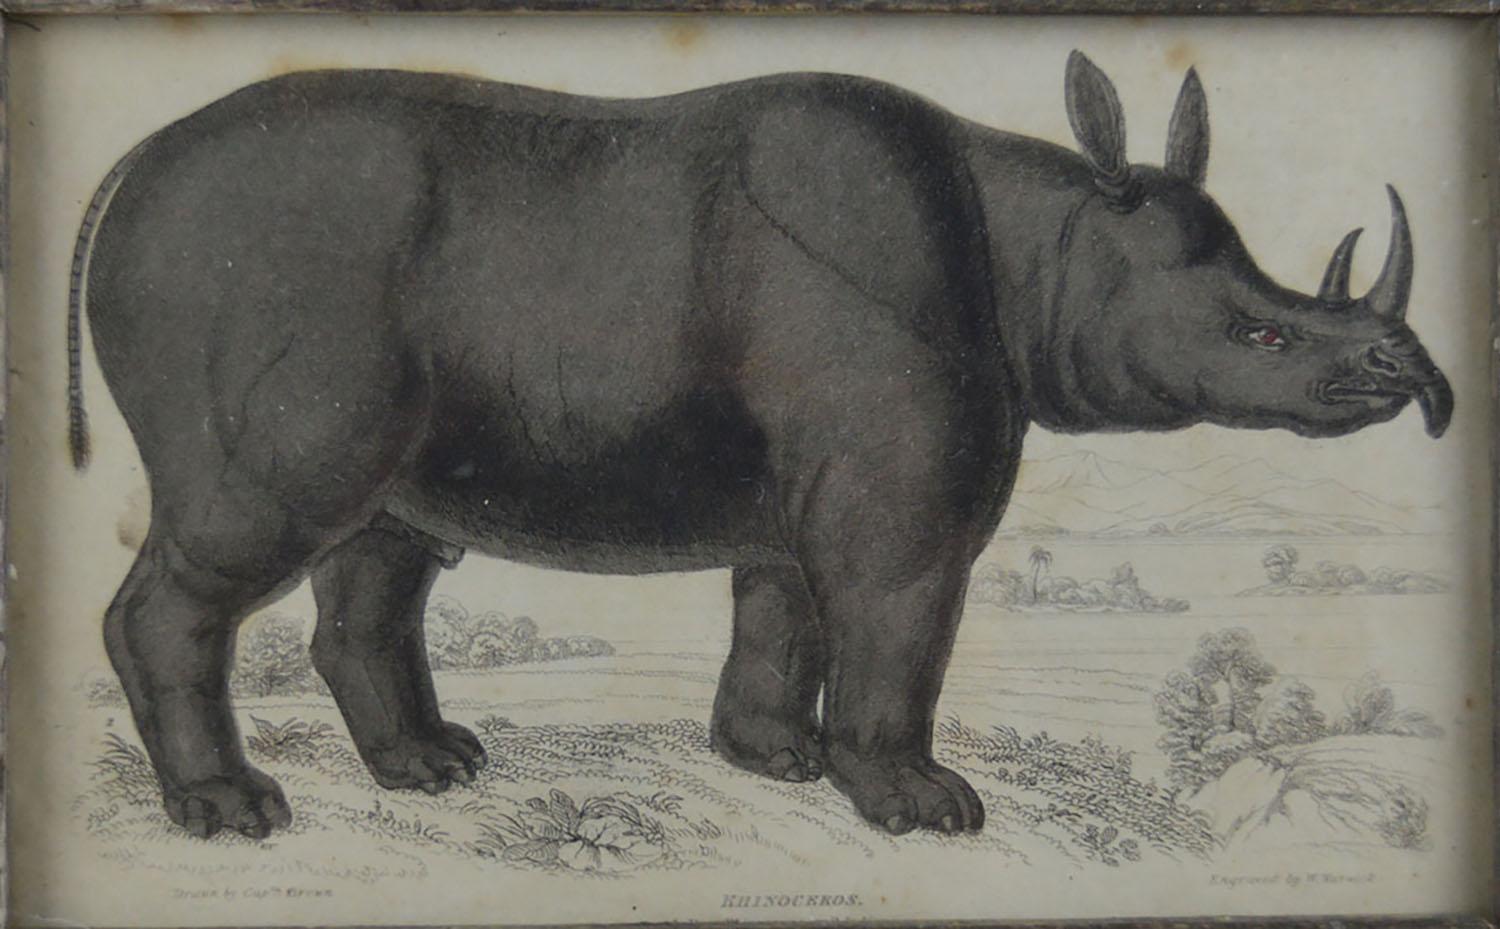 Folk Art Original Antique Print of a Rhinoceros, 1830s